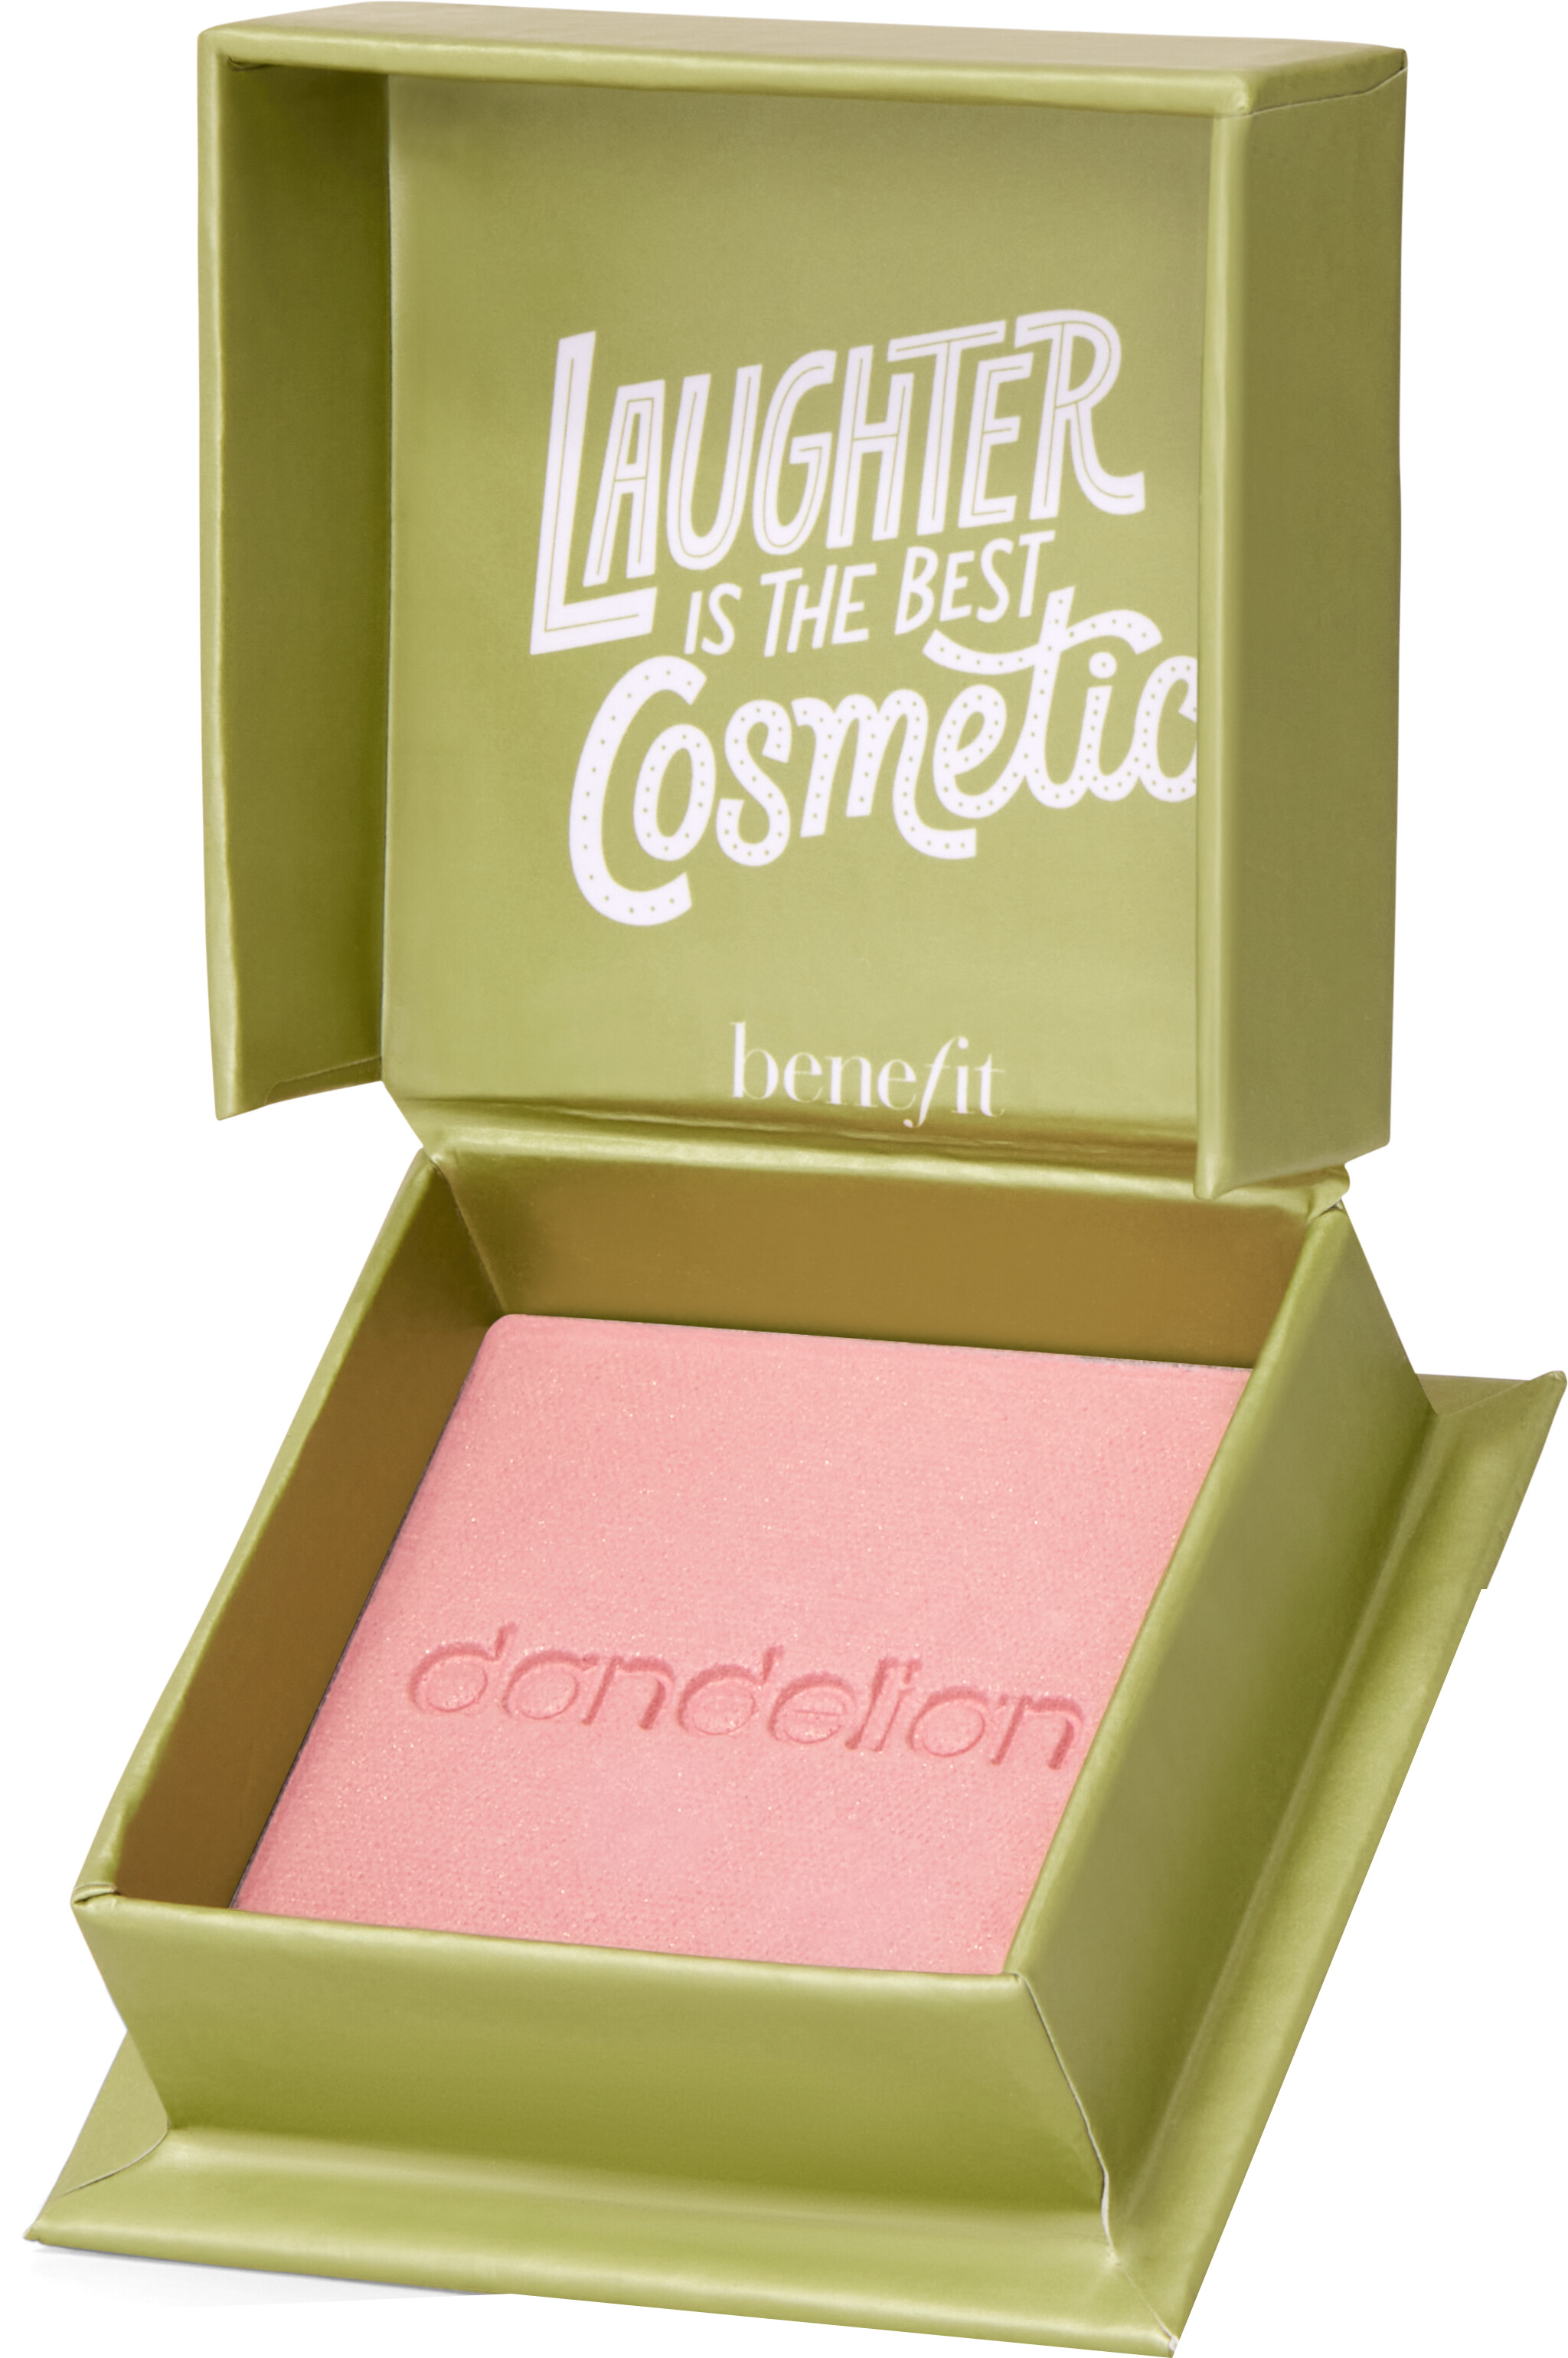 Benefit Dandelion - Brightening Blush and Face Powder 2.5g - Mini